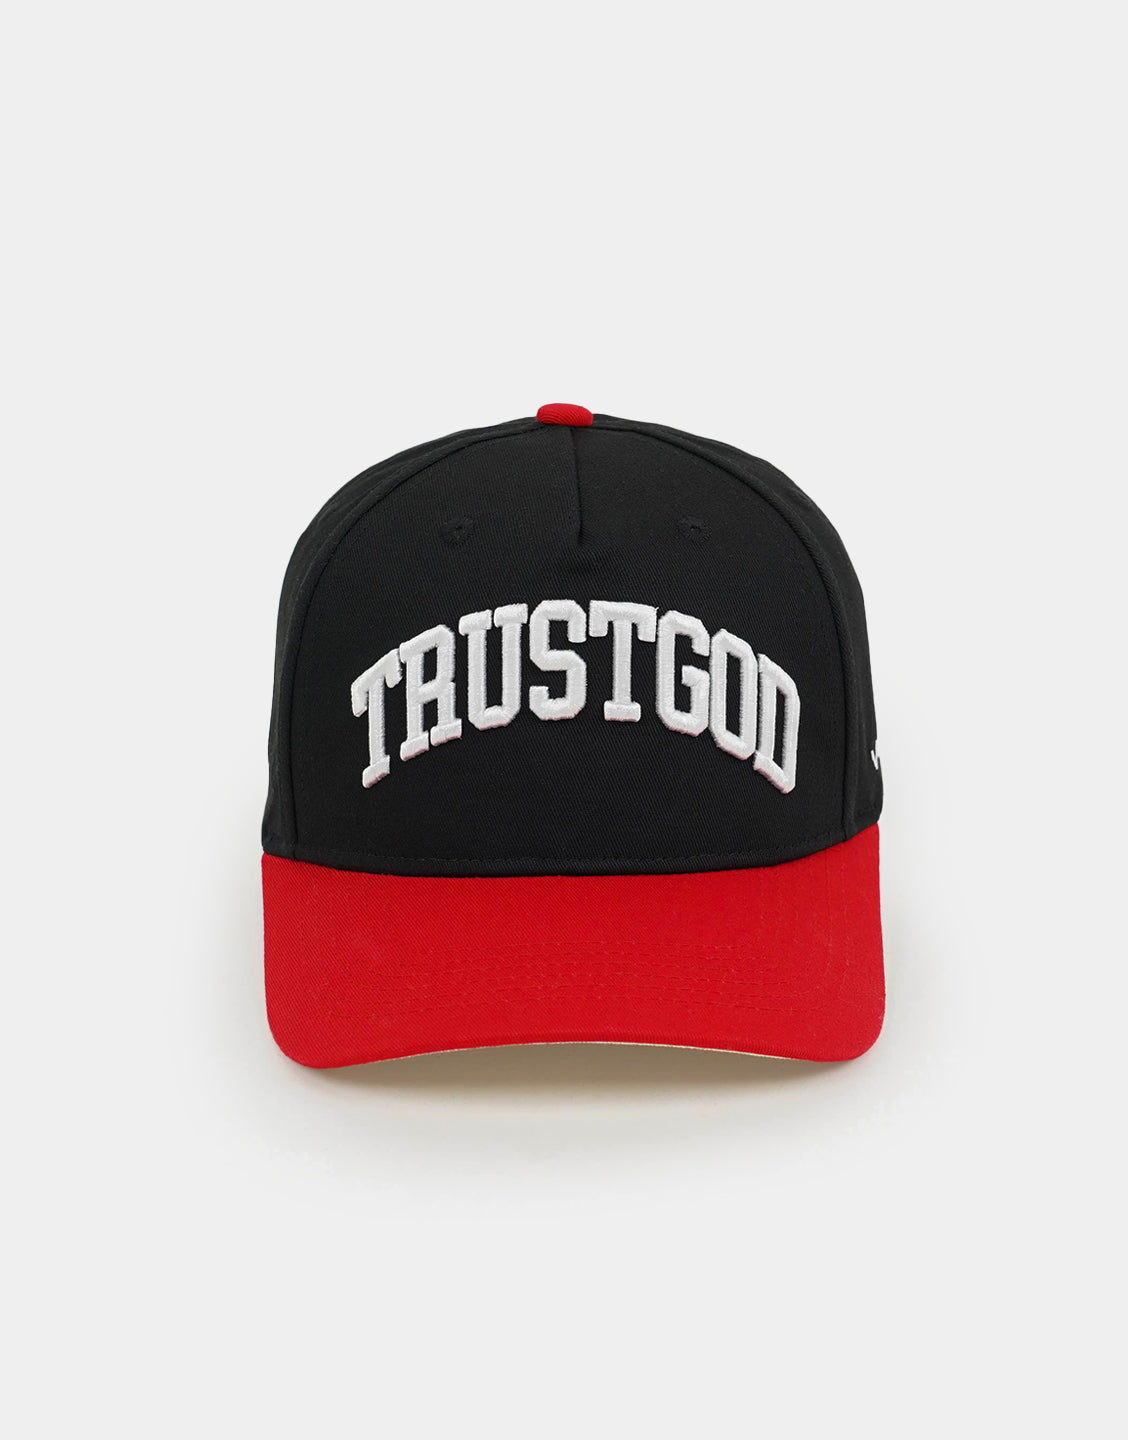 Black Trust God Premium Baseball Hat - Red Accent - VOTC Clothing